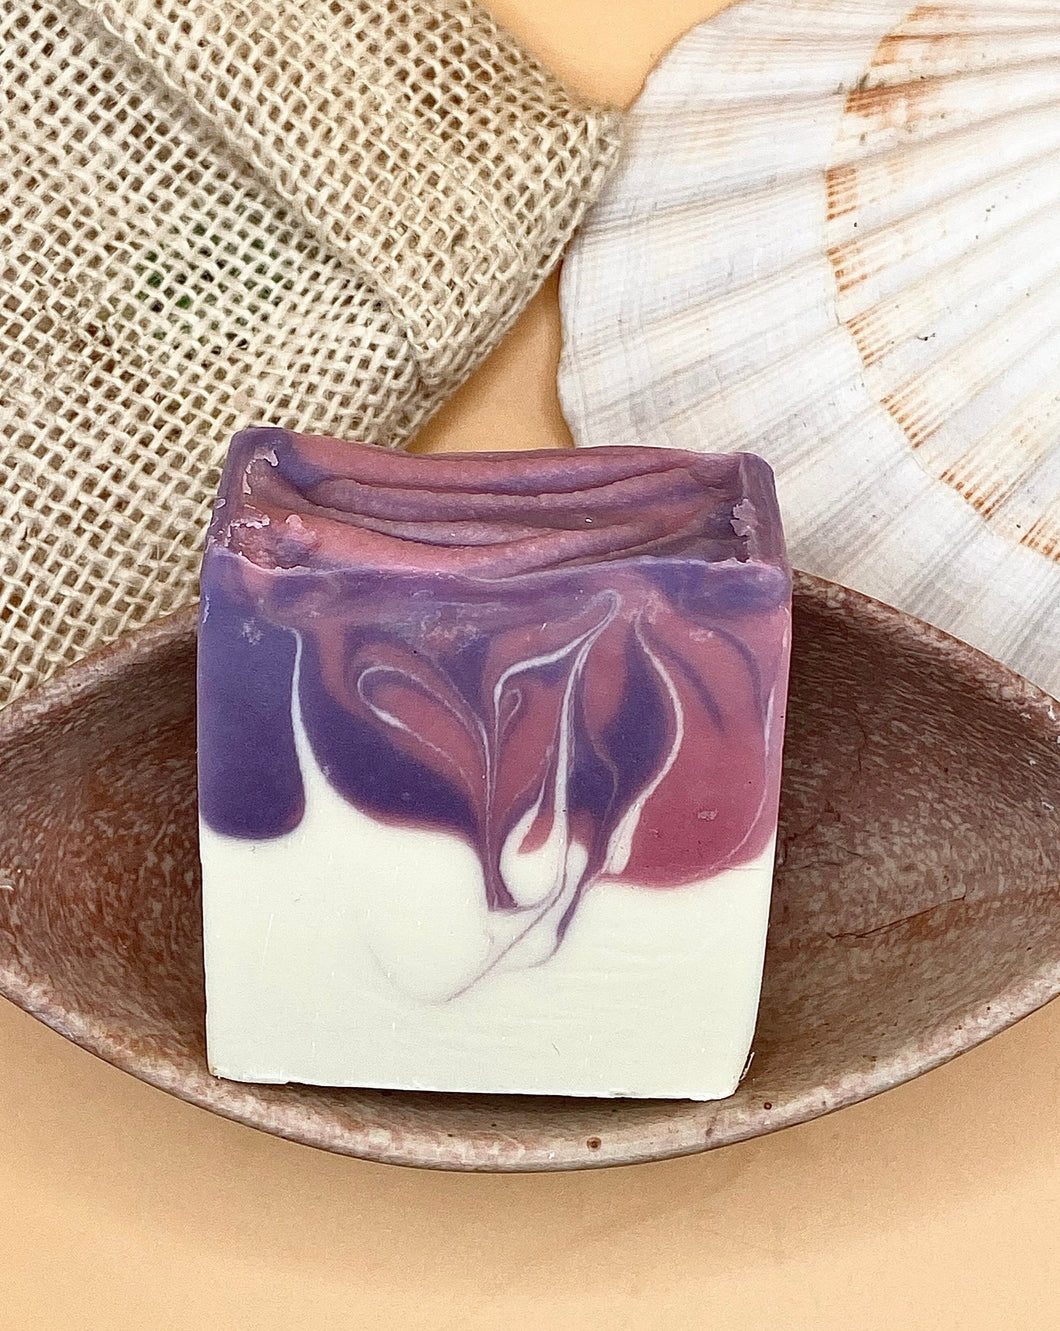 Lavender soap